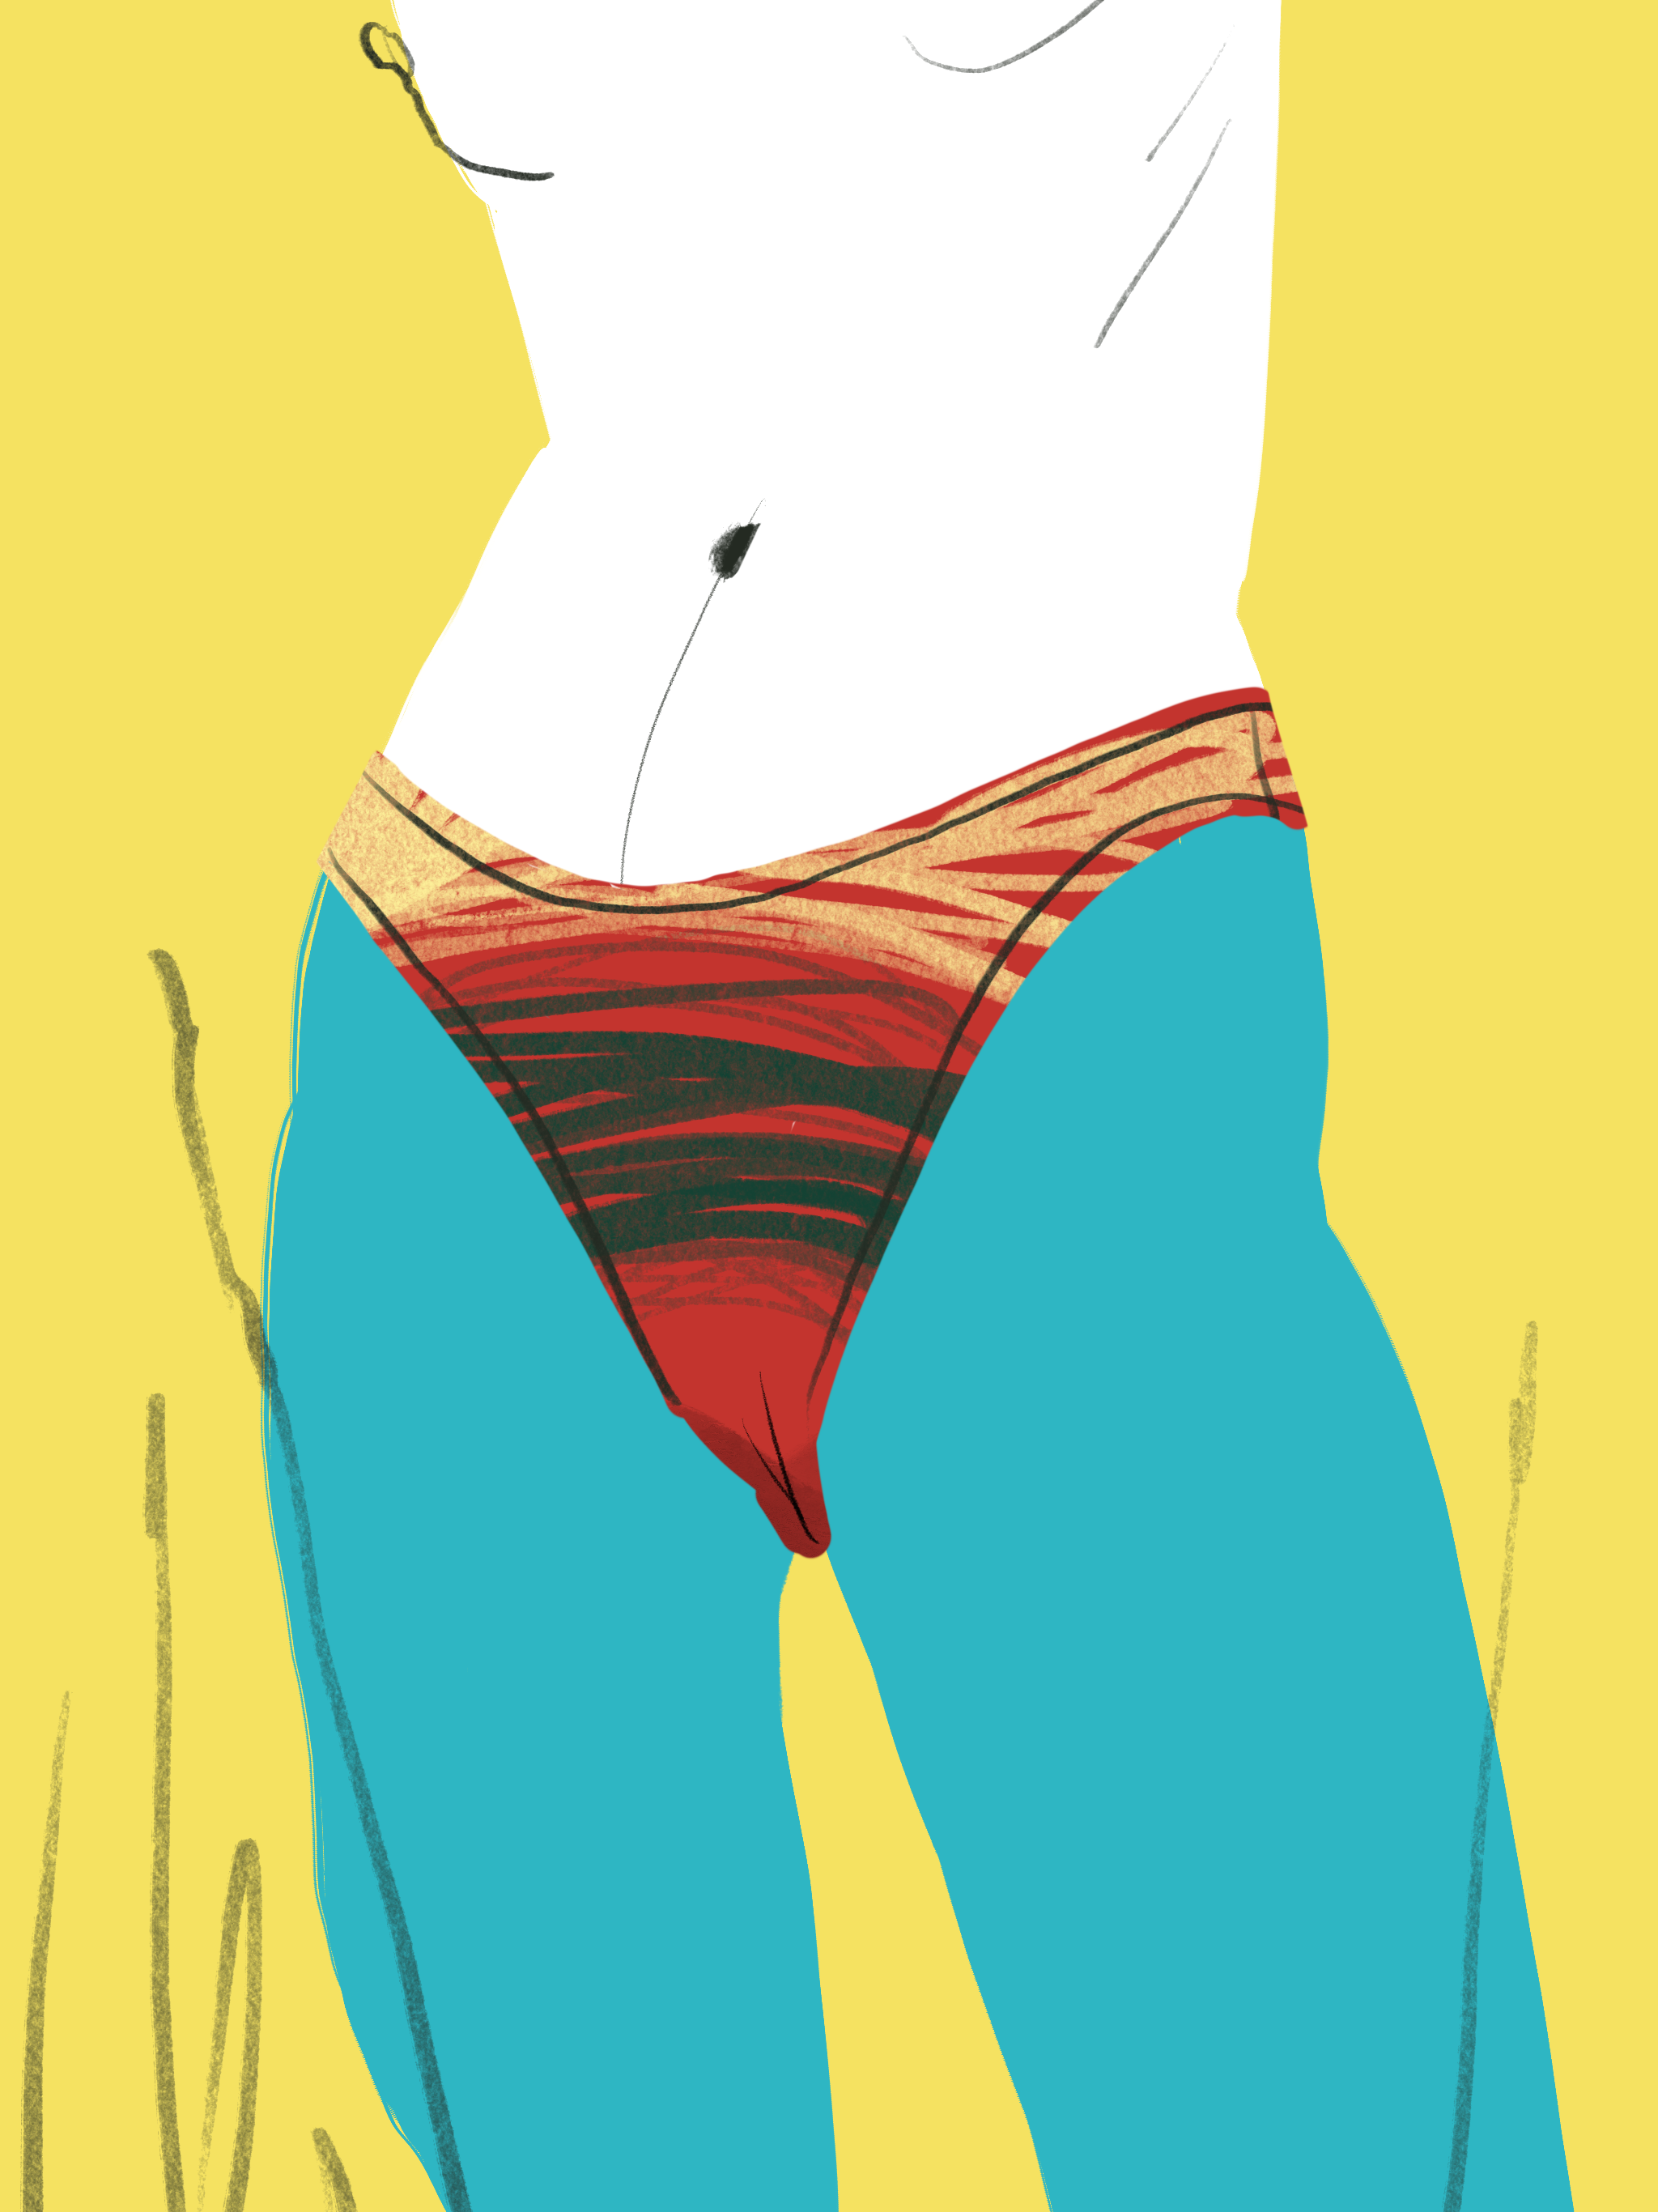 Summer pants, fashion illustration by Silvana Mariani